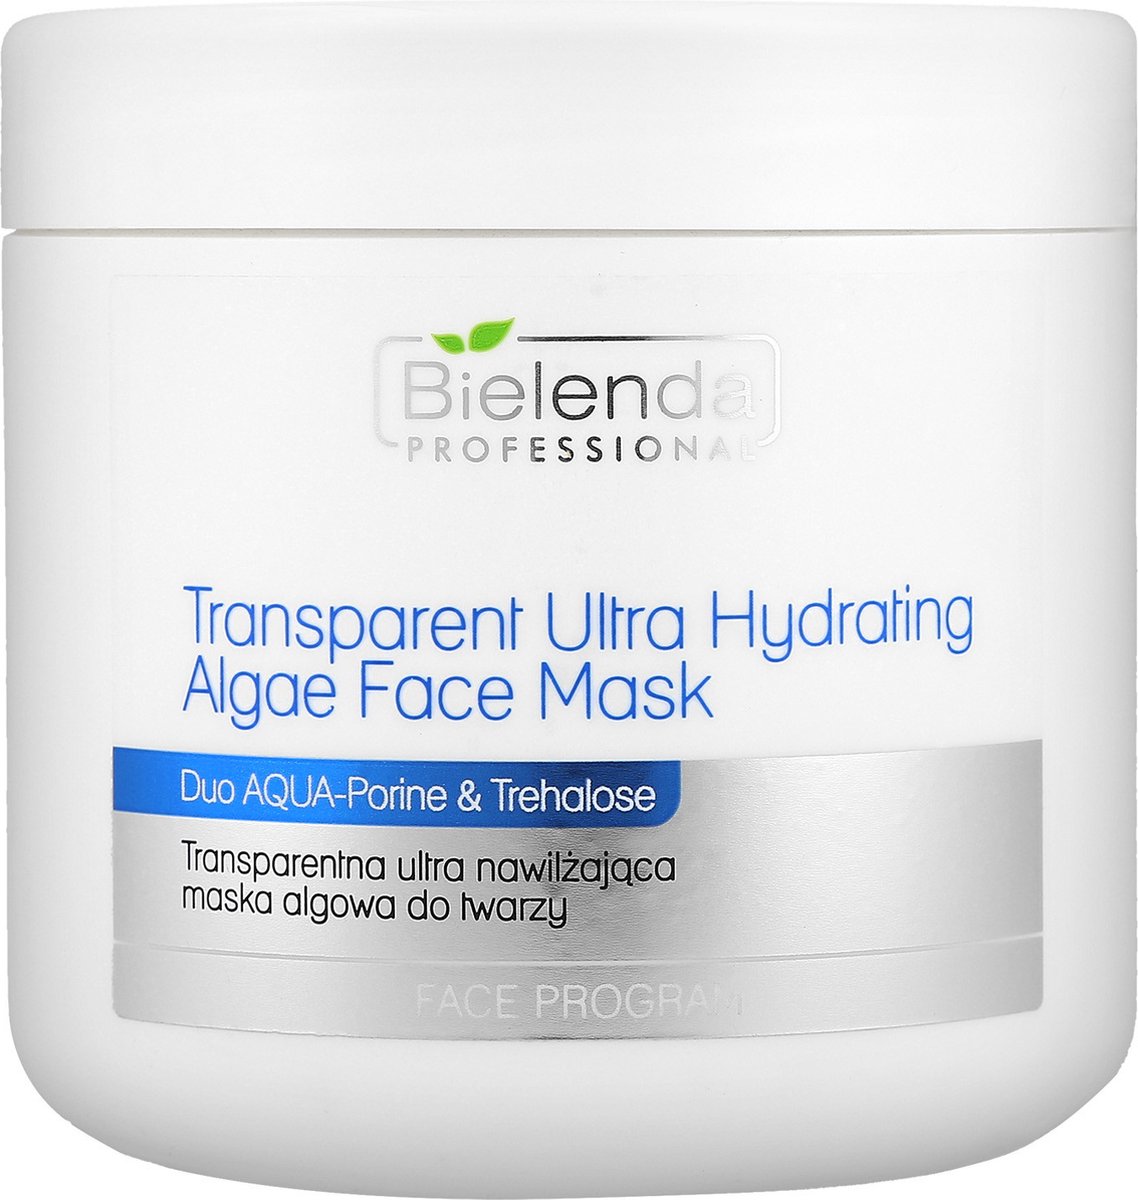 Bielenda Professional - Face Program Trasparent Ultra Hydrating Algae Face Mask Translucent Ultra Moisturizing Algae Face Mask 190G